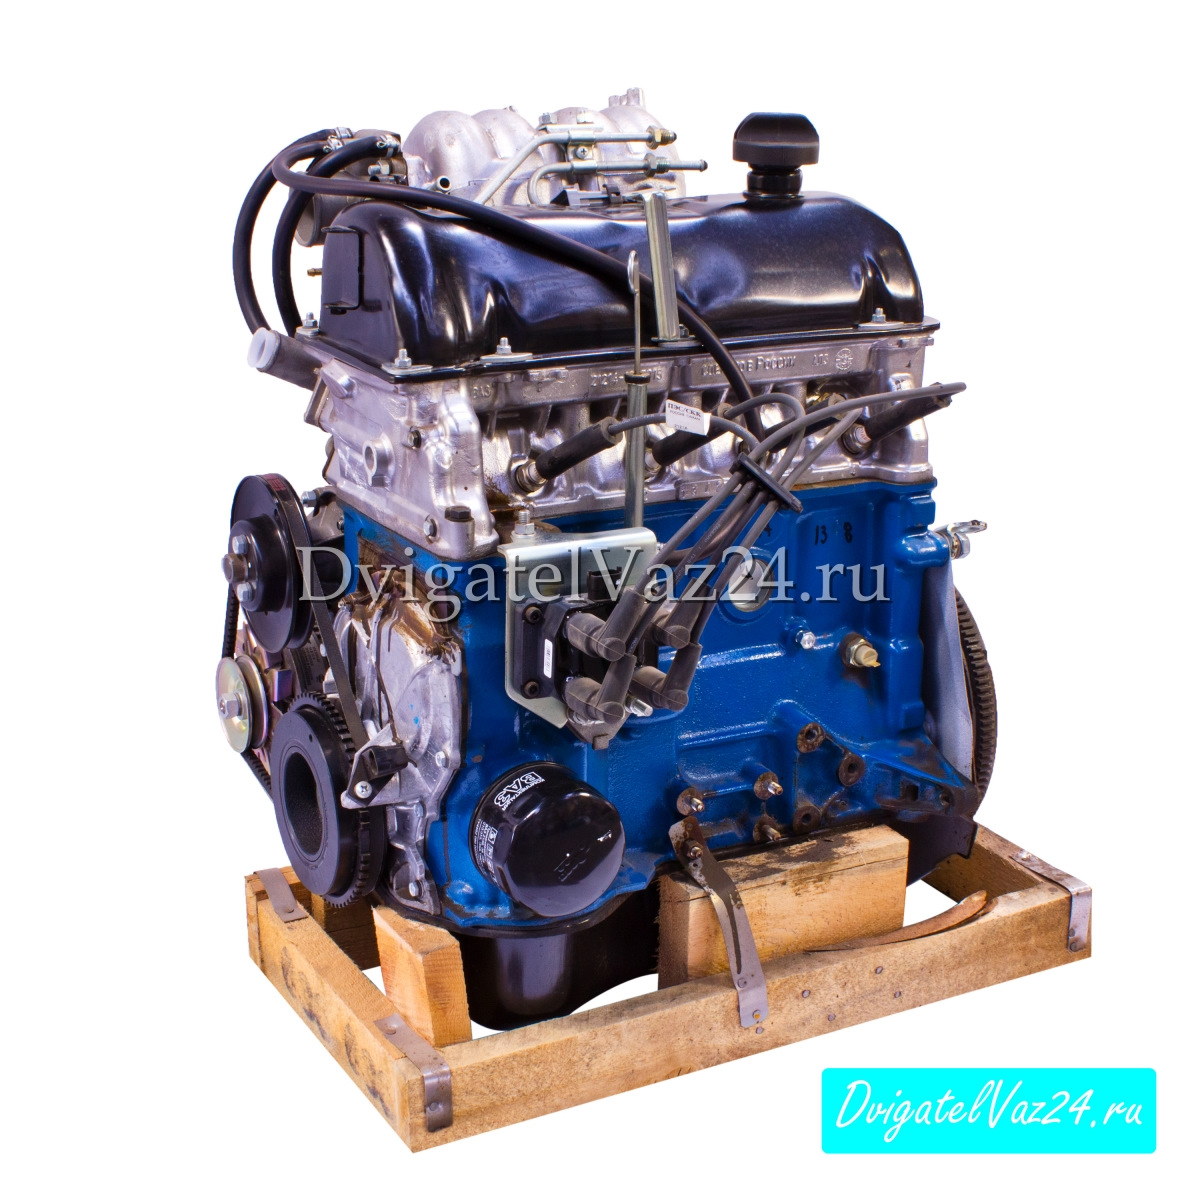 Двигатель 2107 б у. Мотор ВАЗ 1.6 ВАЗ 2107. Двигатель ВАЗ 2103 инжекторный. ВАЗ 2107 двигатель 1.7. Двигатель ВАЗ 21067 инжектор.